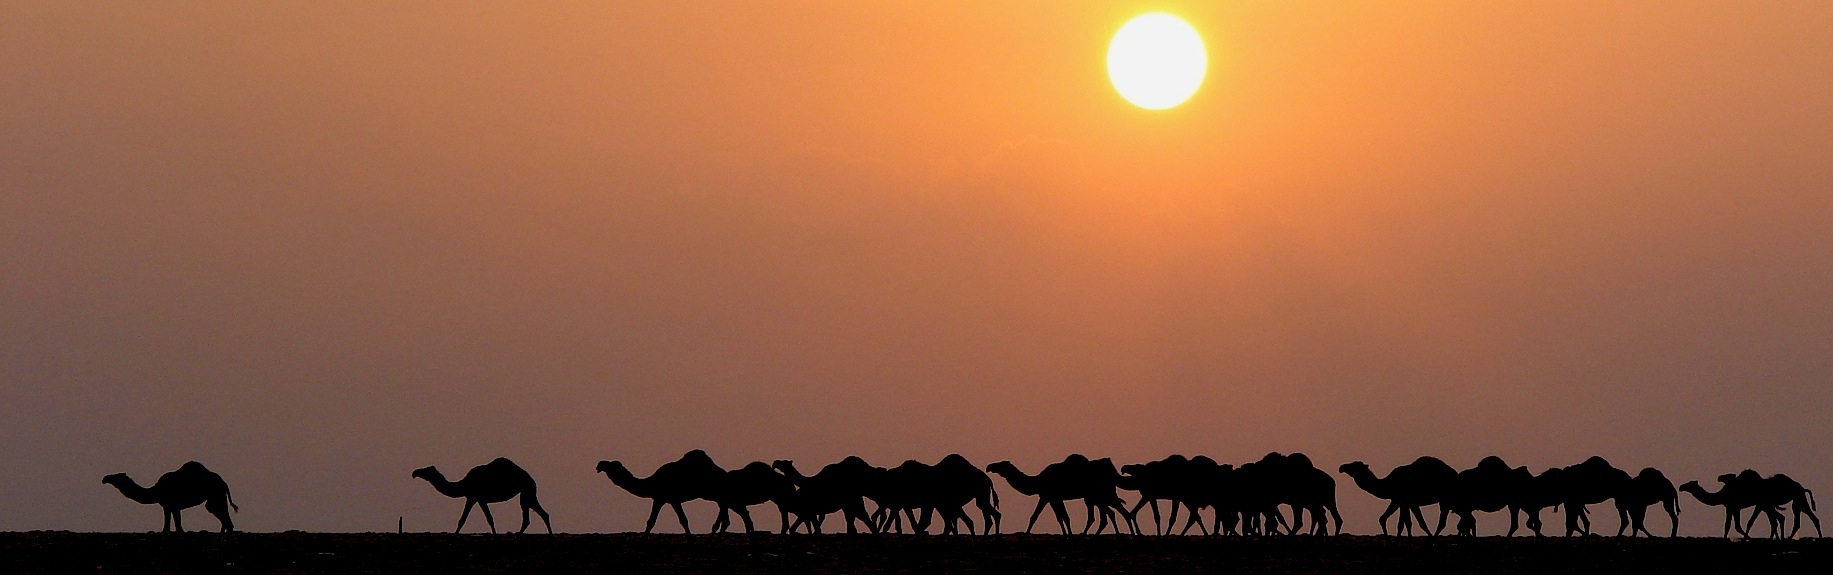 Creaturely empathy with desert animals: A Kuwaiti environmentalist’s social media experiment